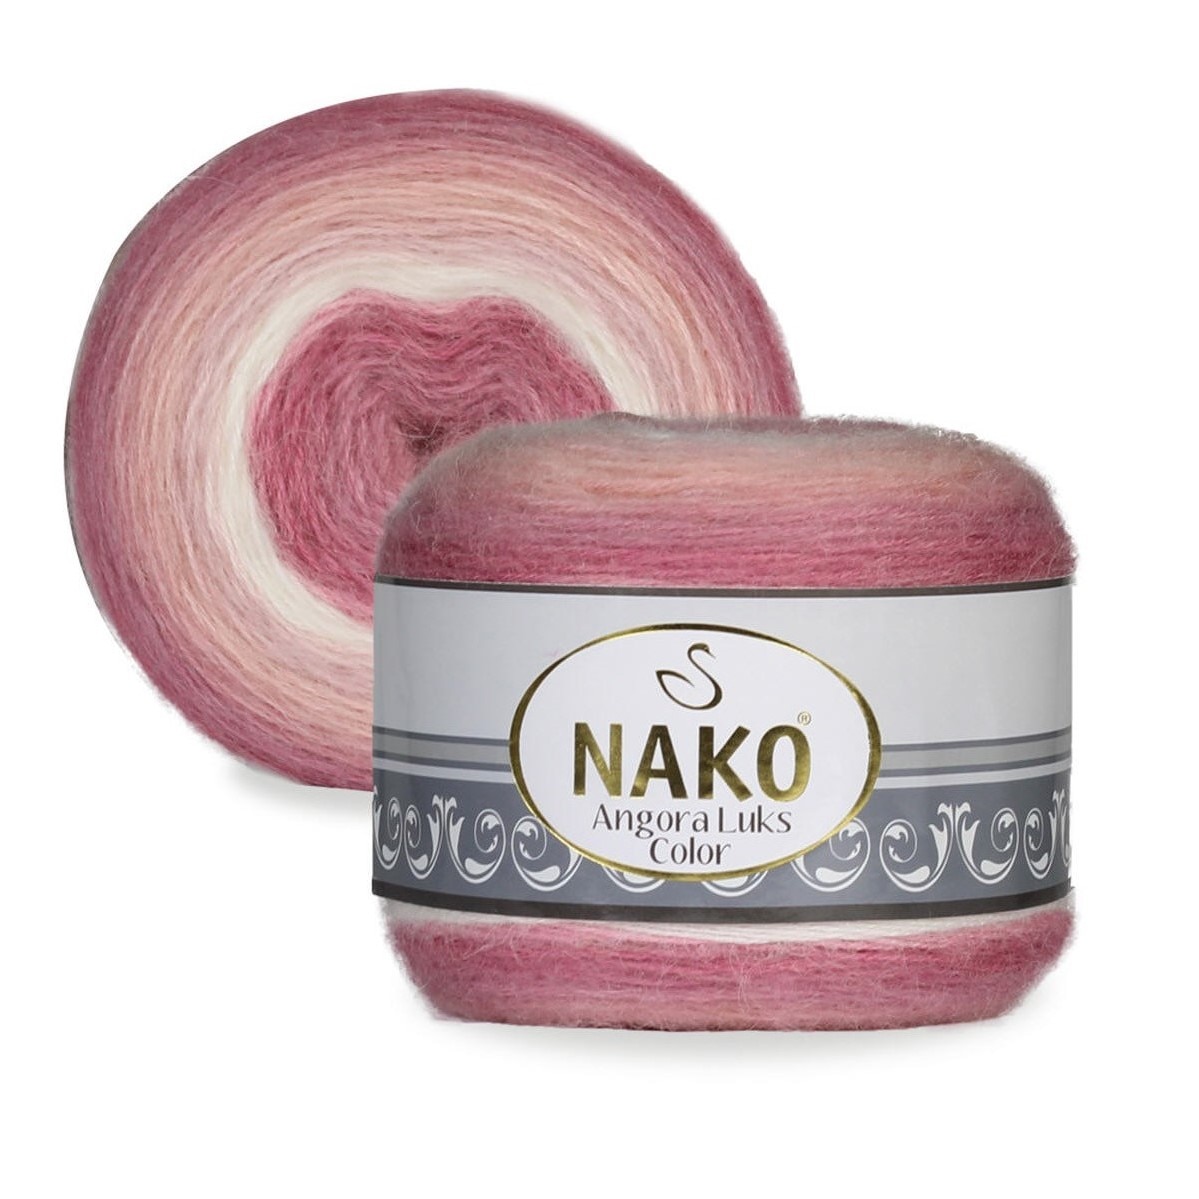 nako angora luks color цветная пряжа из мохера